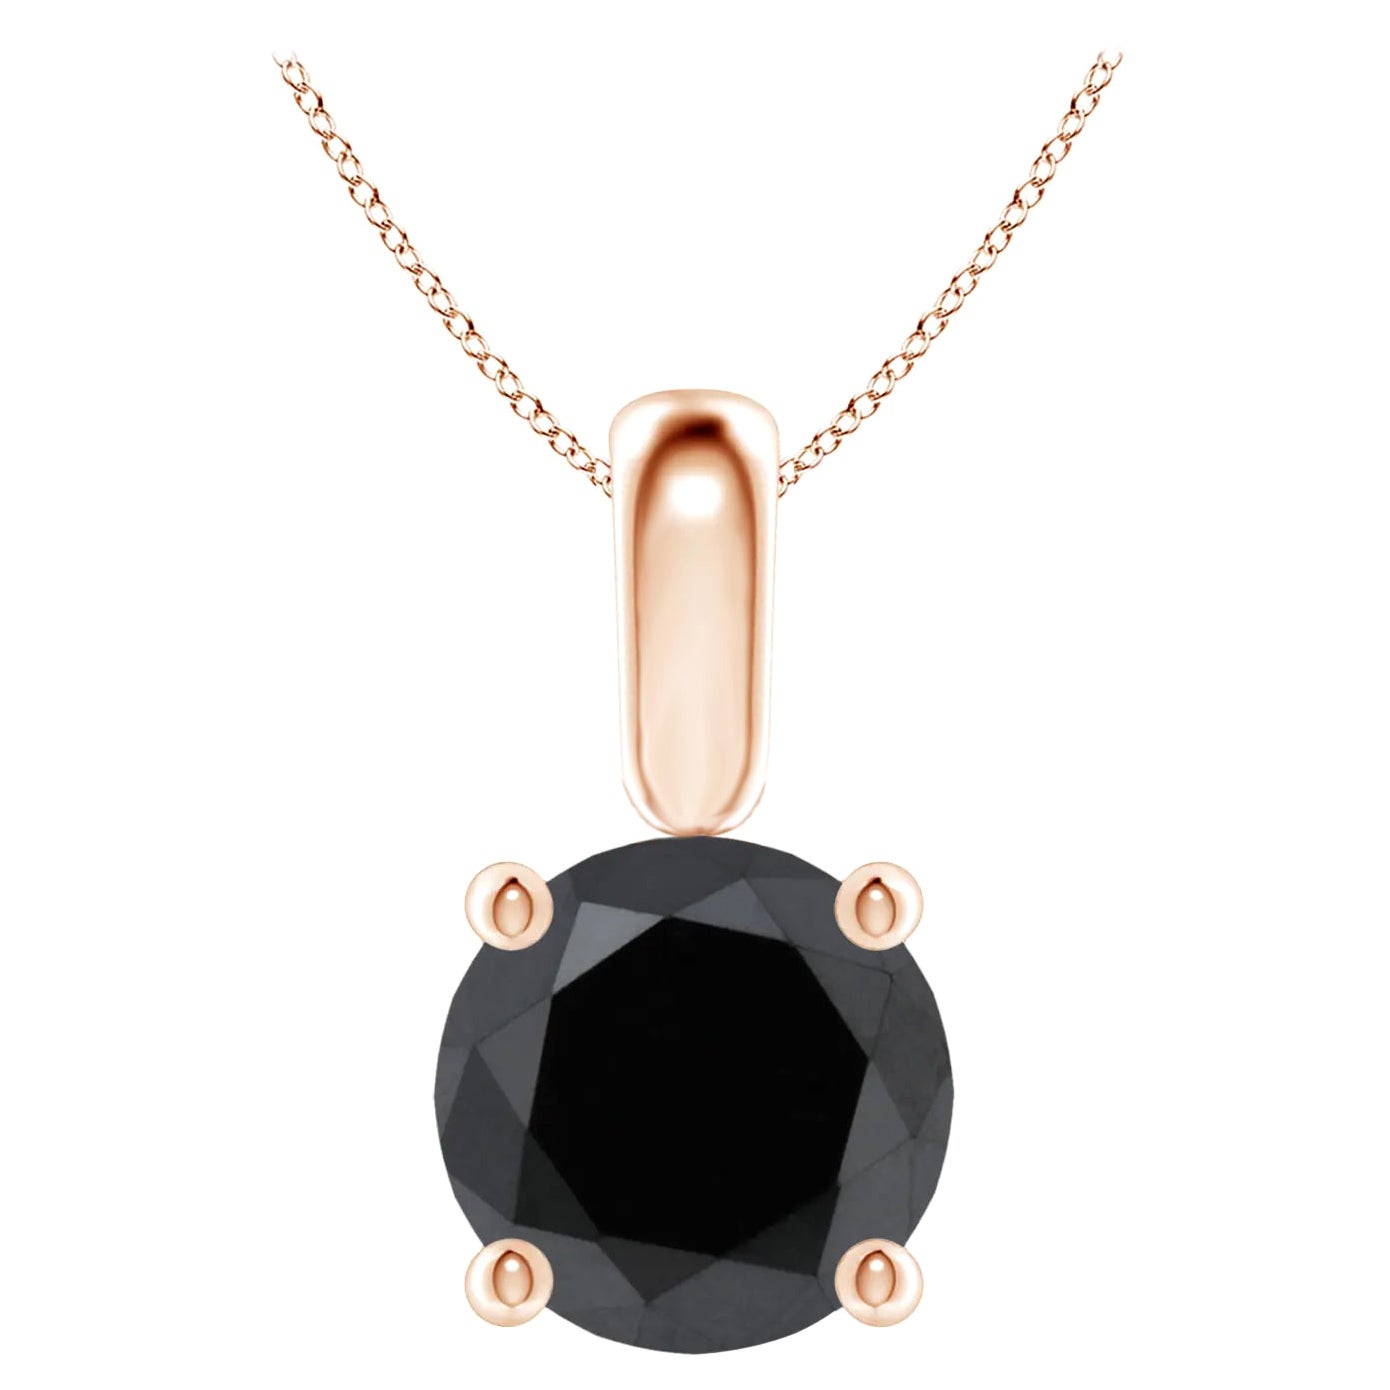 3.15 Carat Round Black Diamond Solitaire Pendant Necklace in 14K Rose Gold